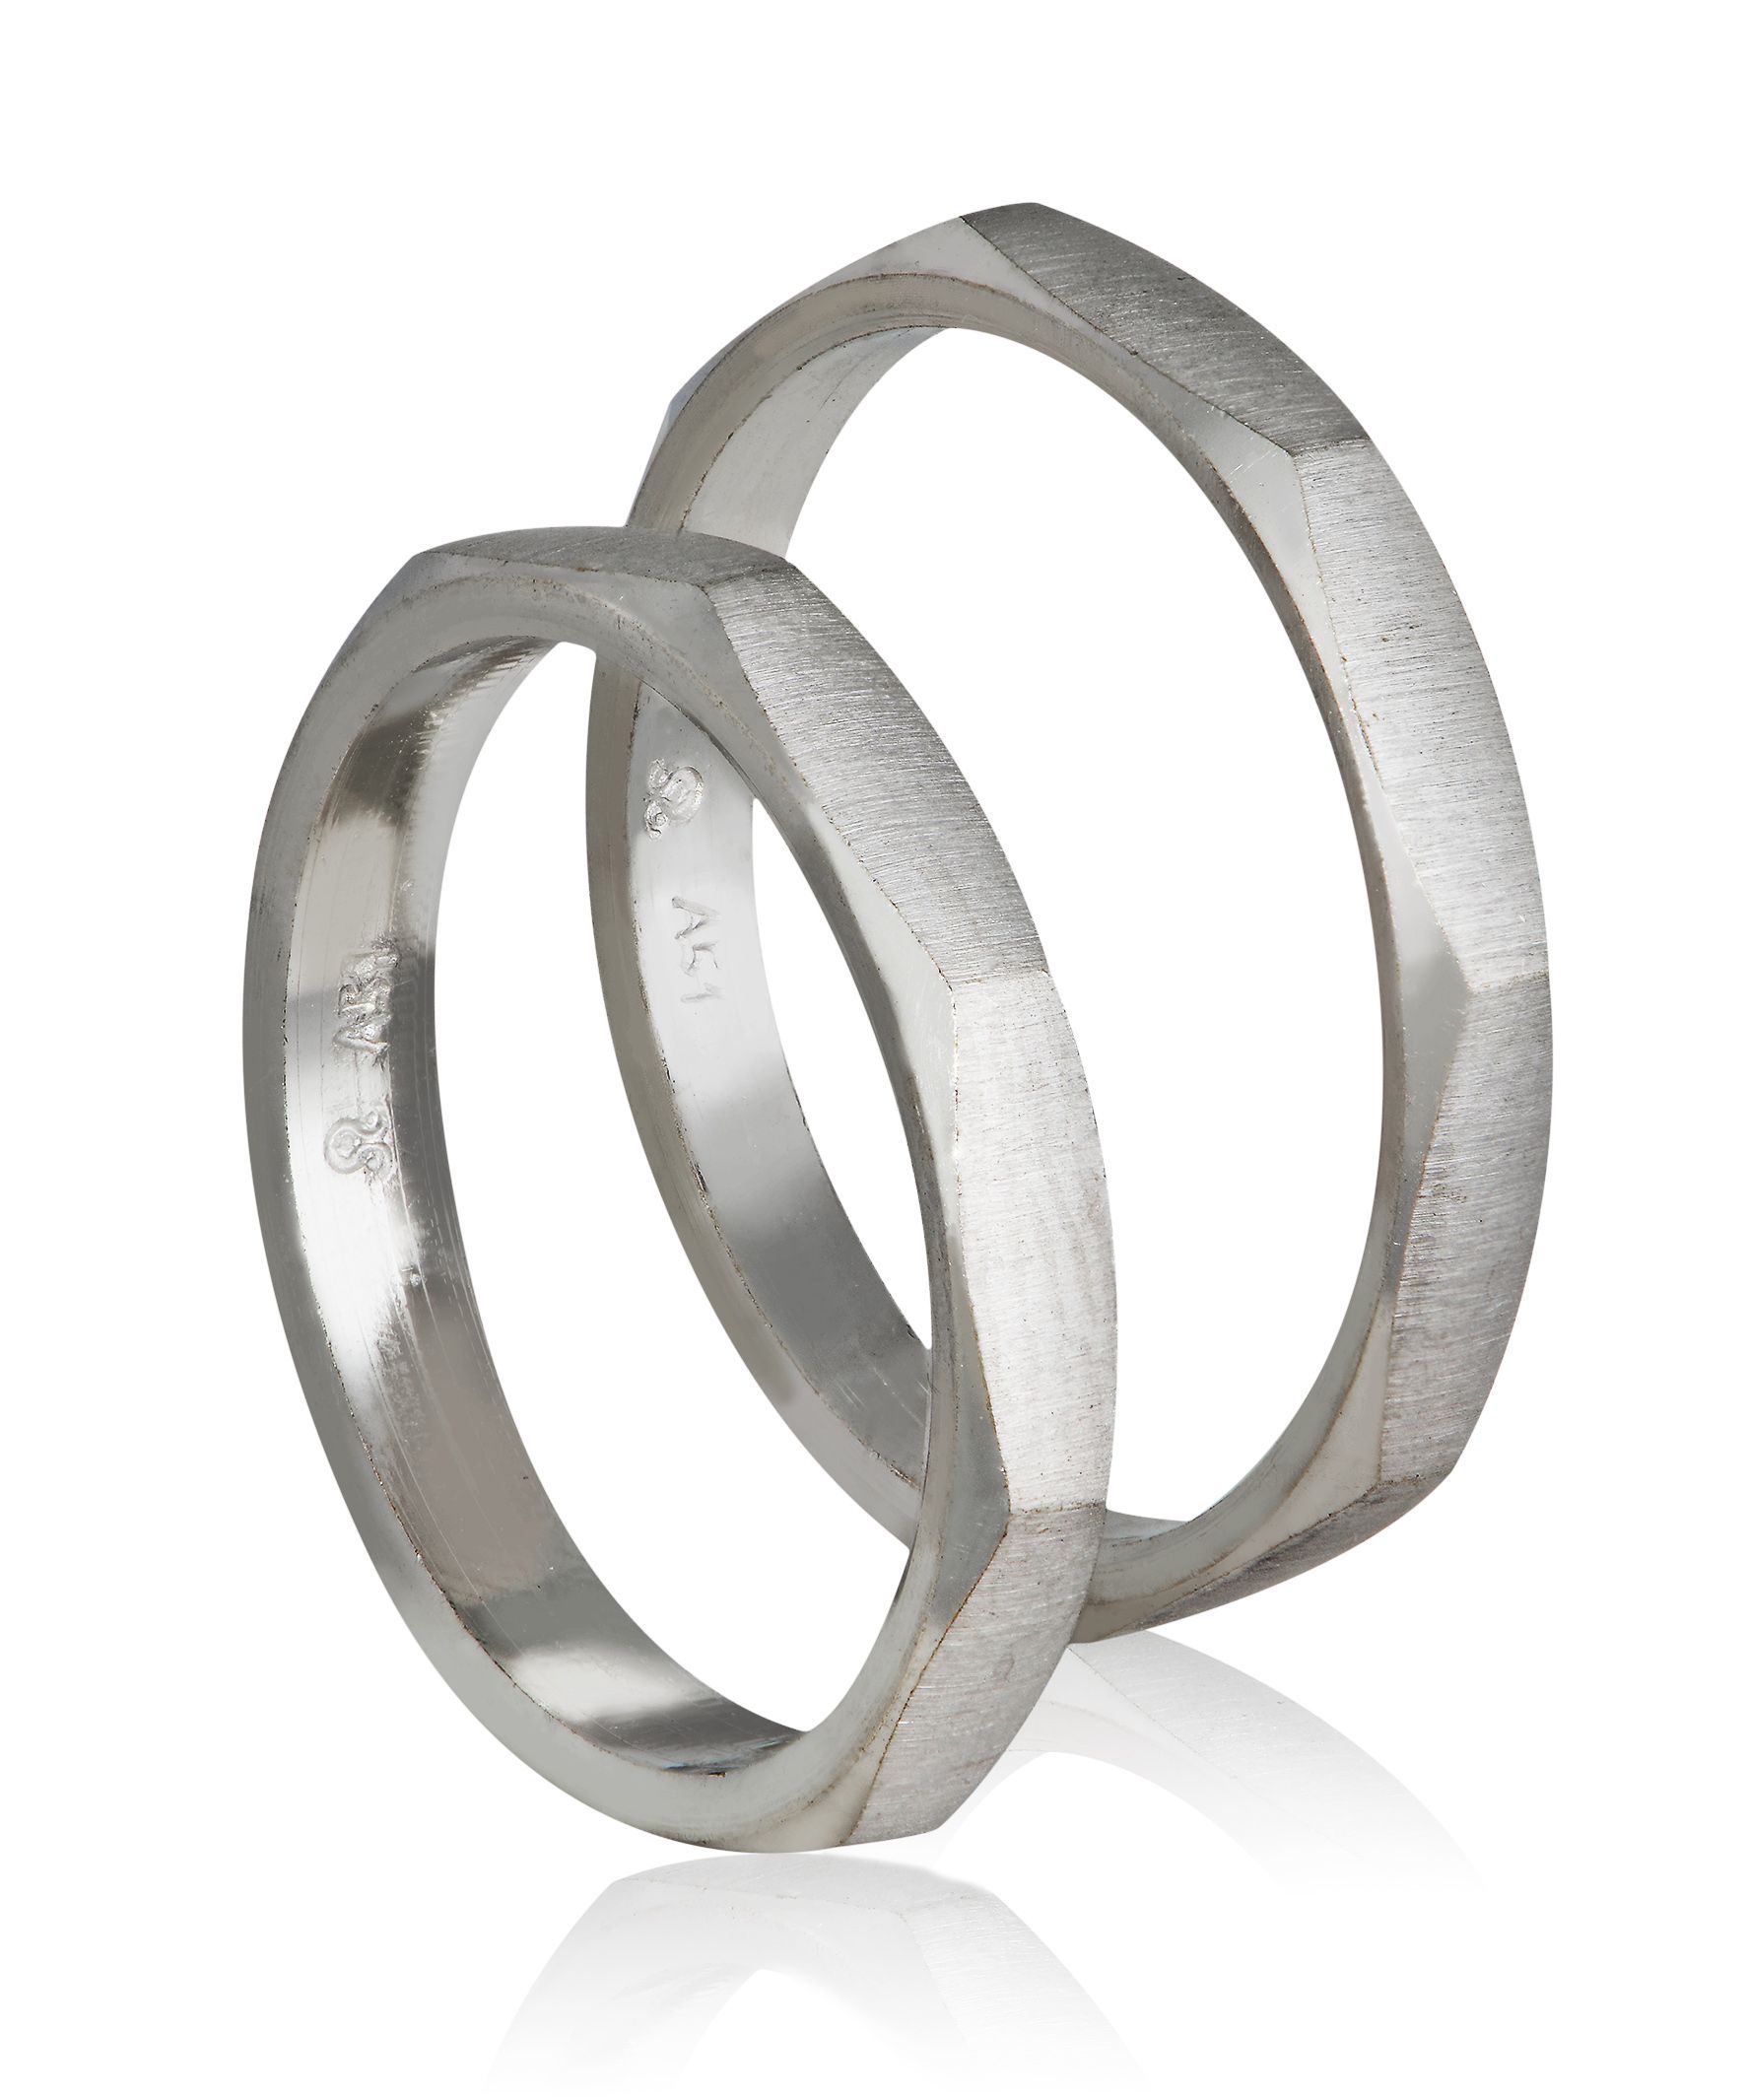 White gold wedding rings 3mm (code 407)